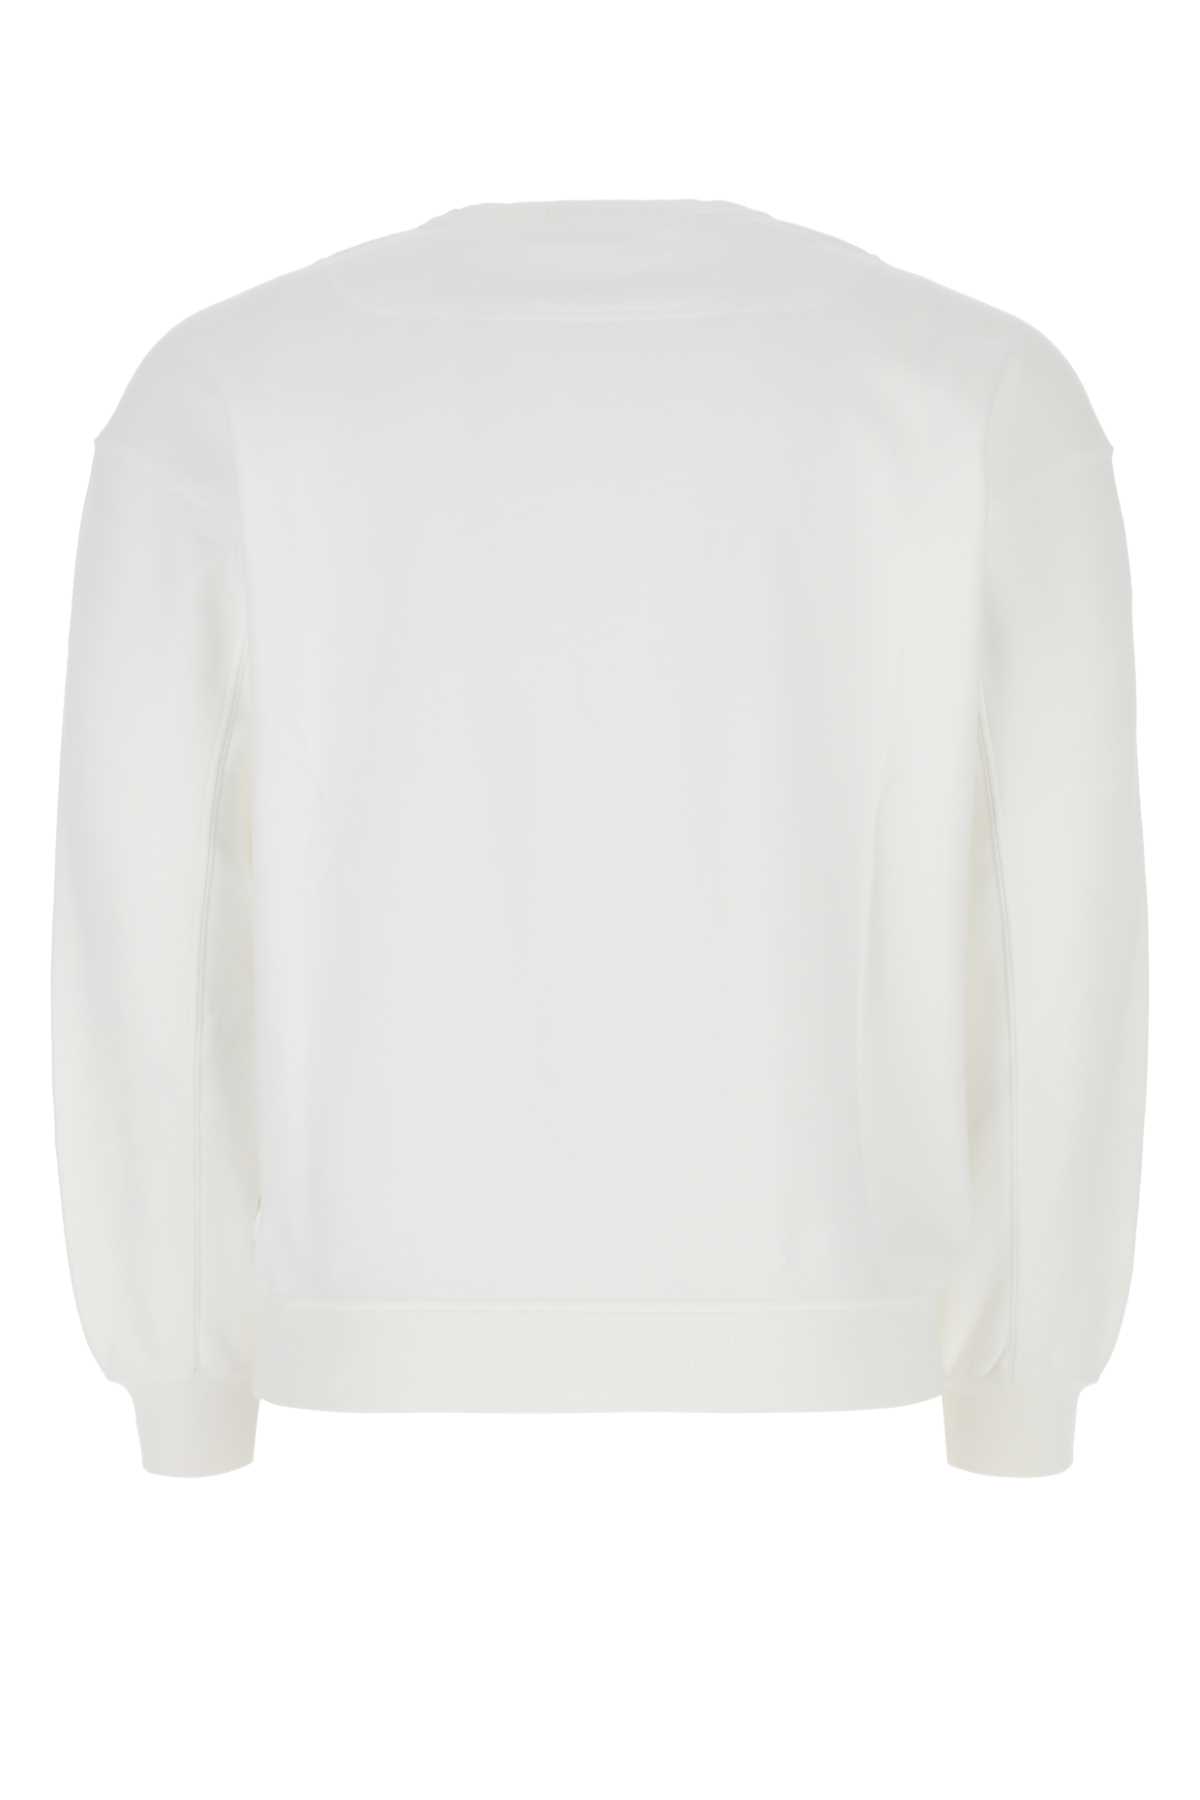 Stone Island White Cotton Sweatshirt In V0001